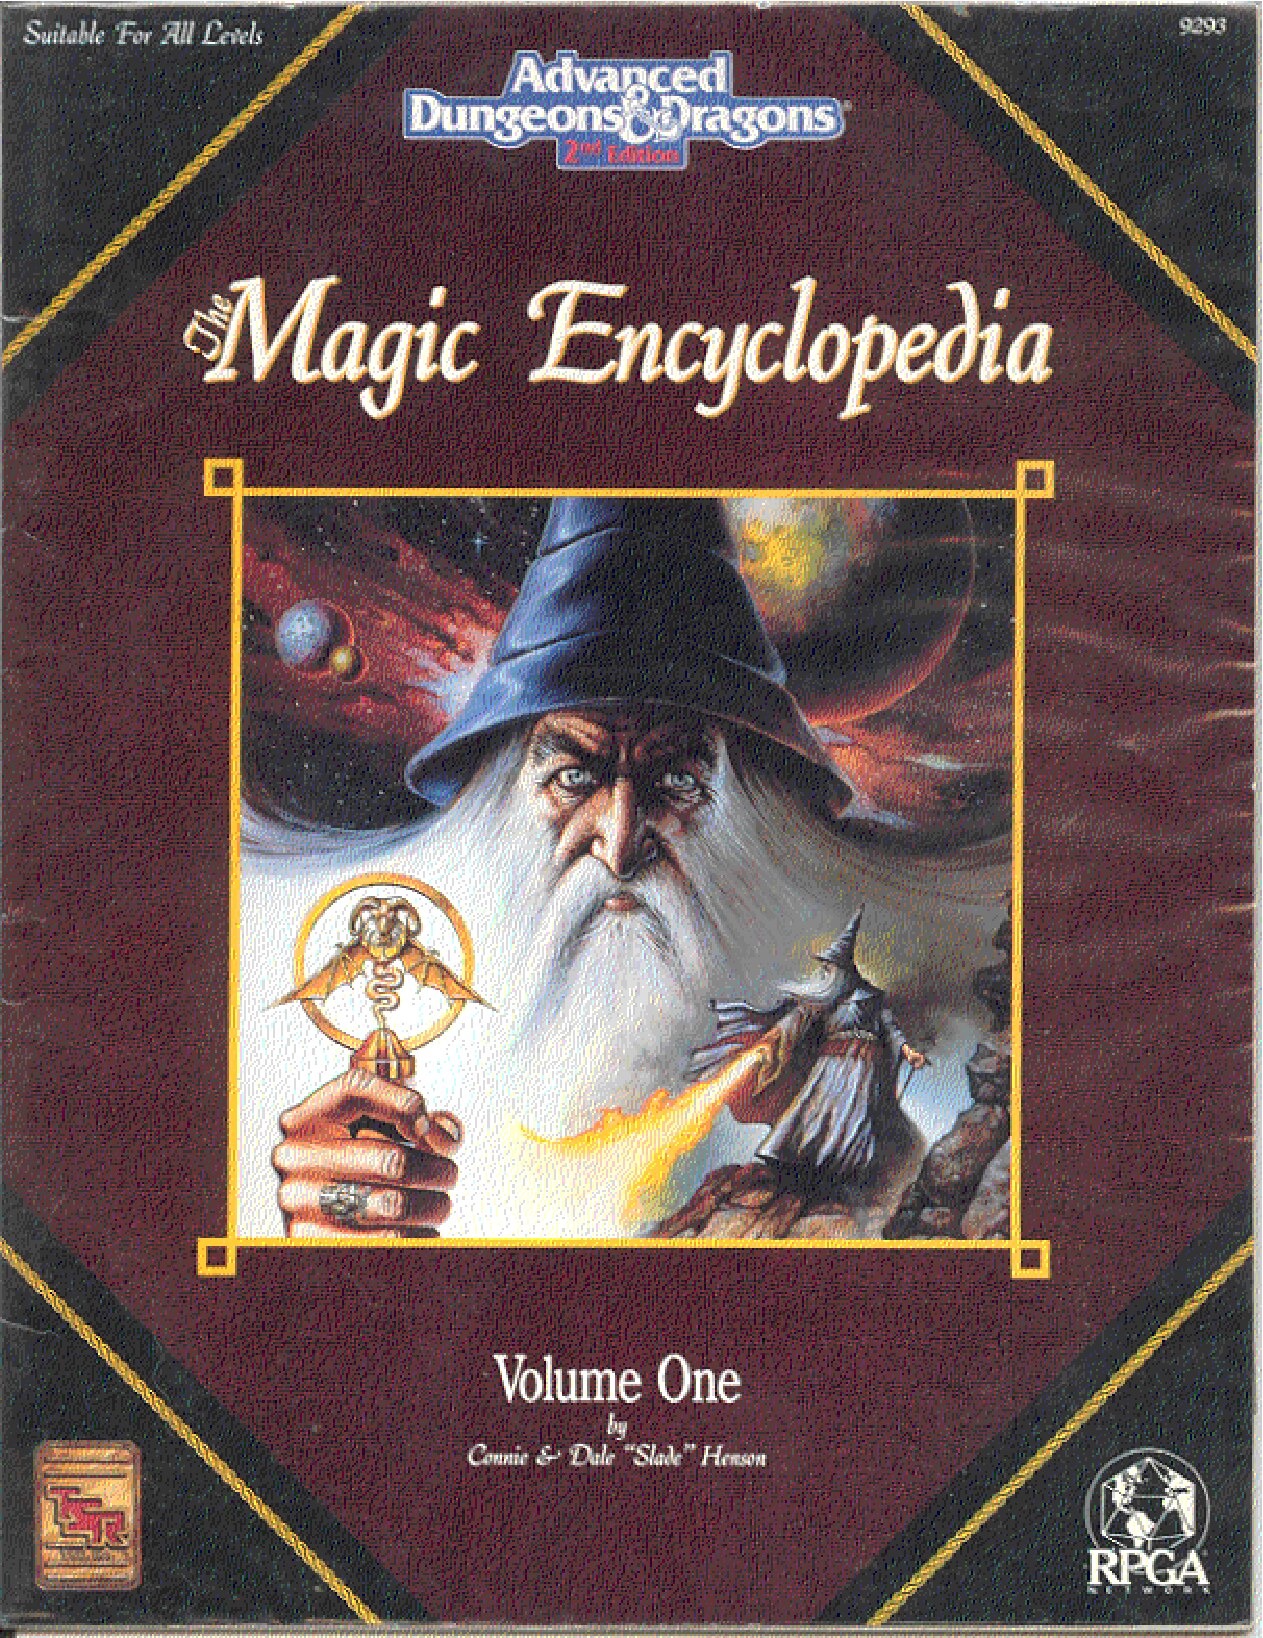 The Magic Encyclopedia - Volume 1 (9293)